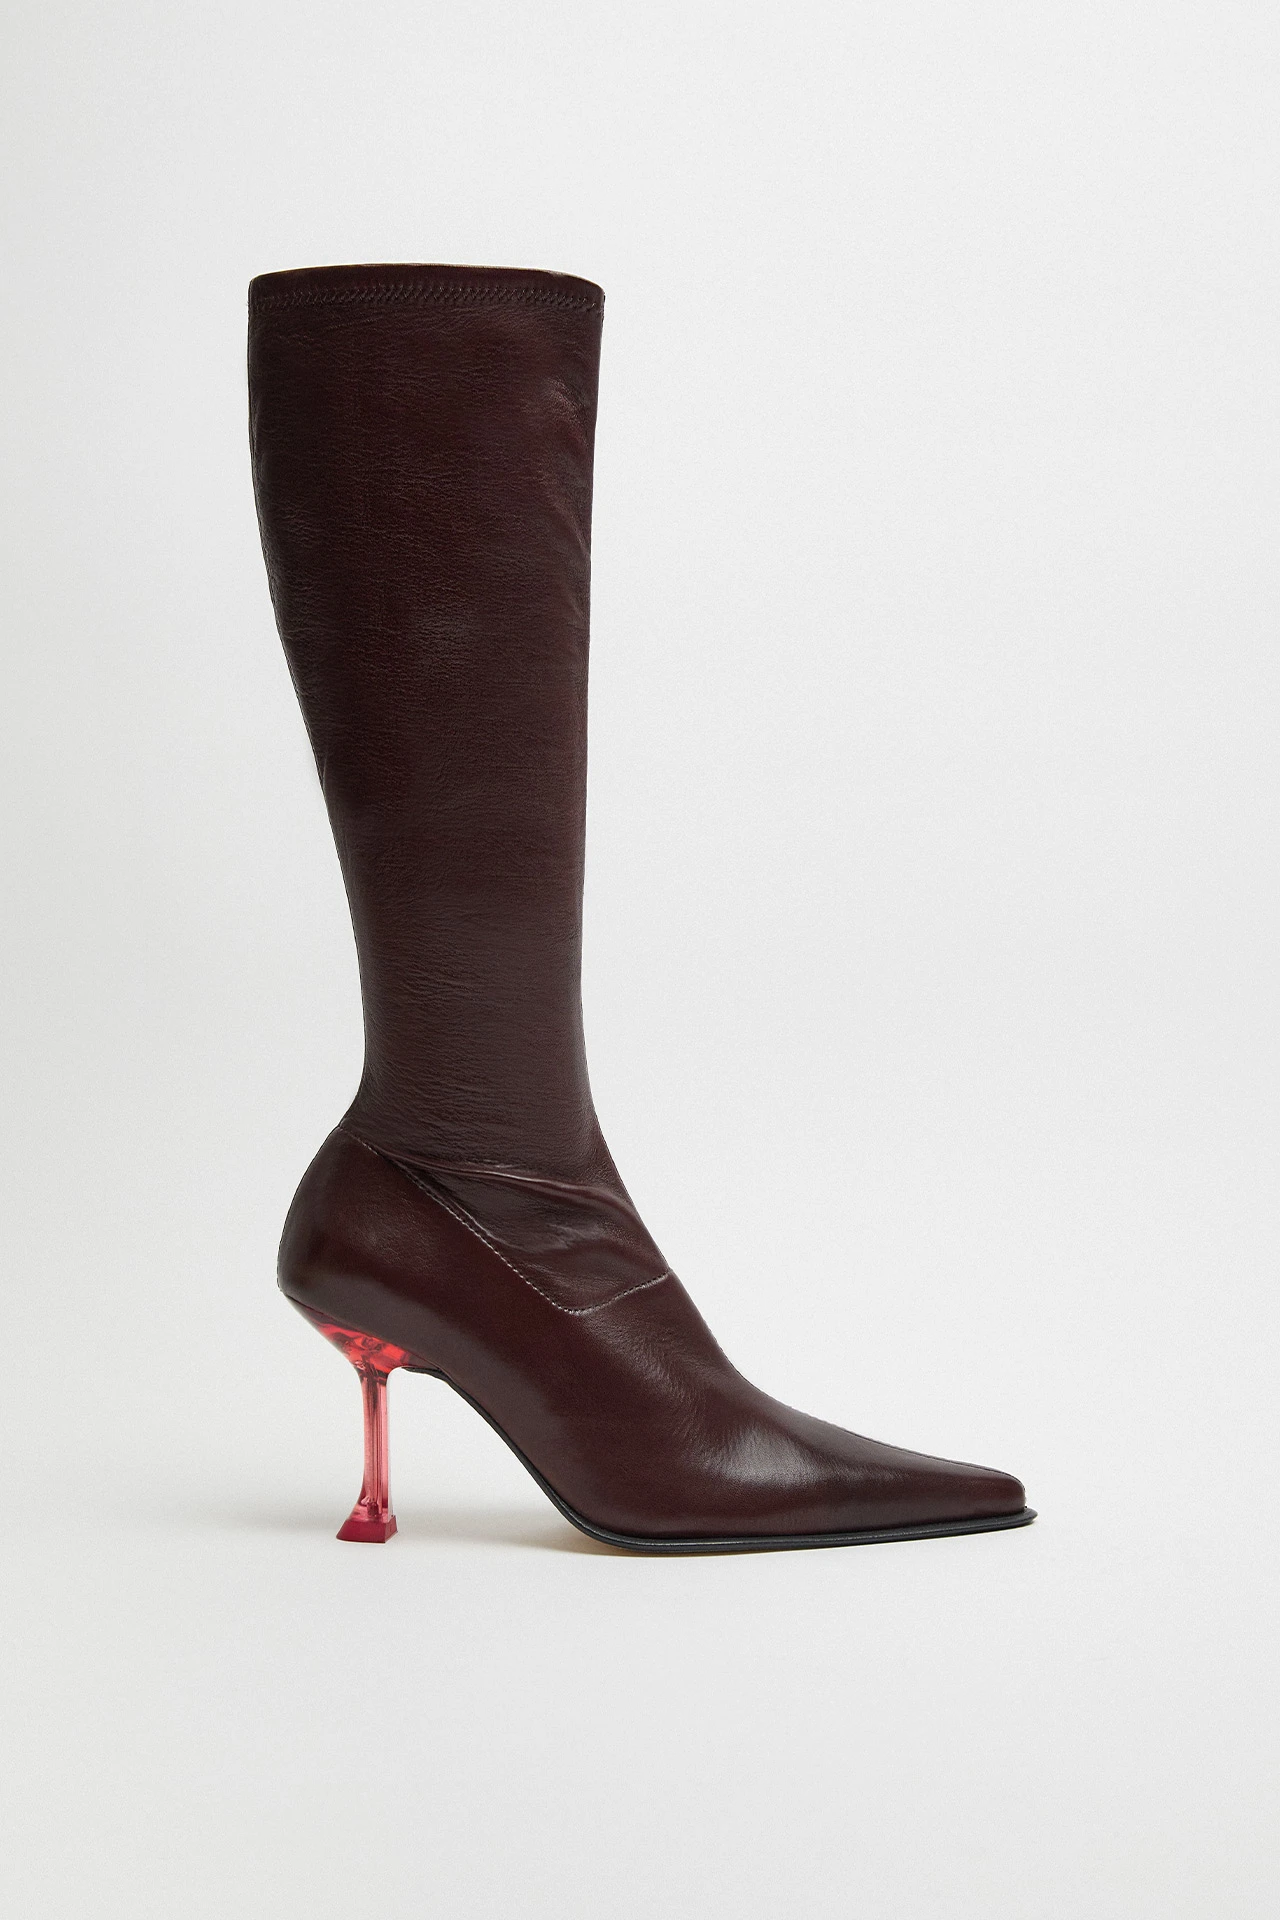 Miista-carlita-burgundy-tall-boots-01